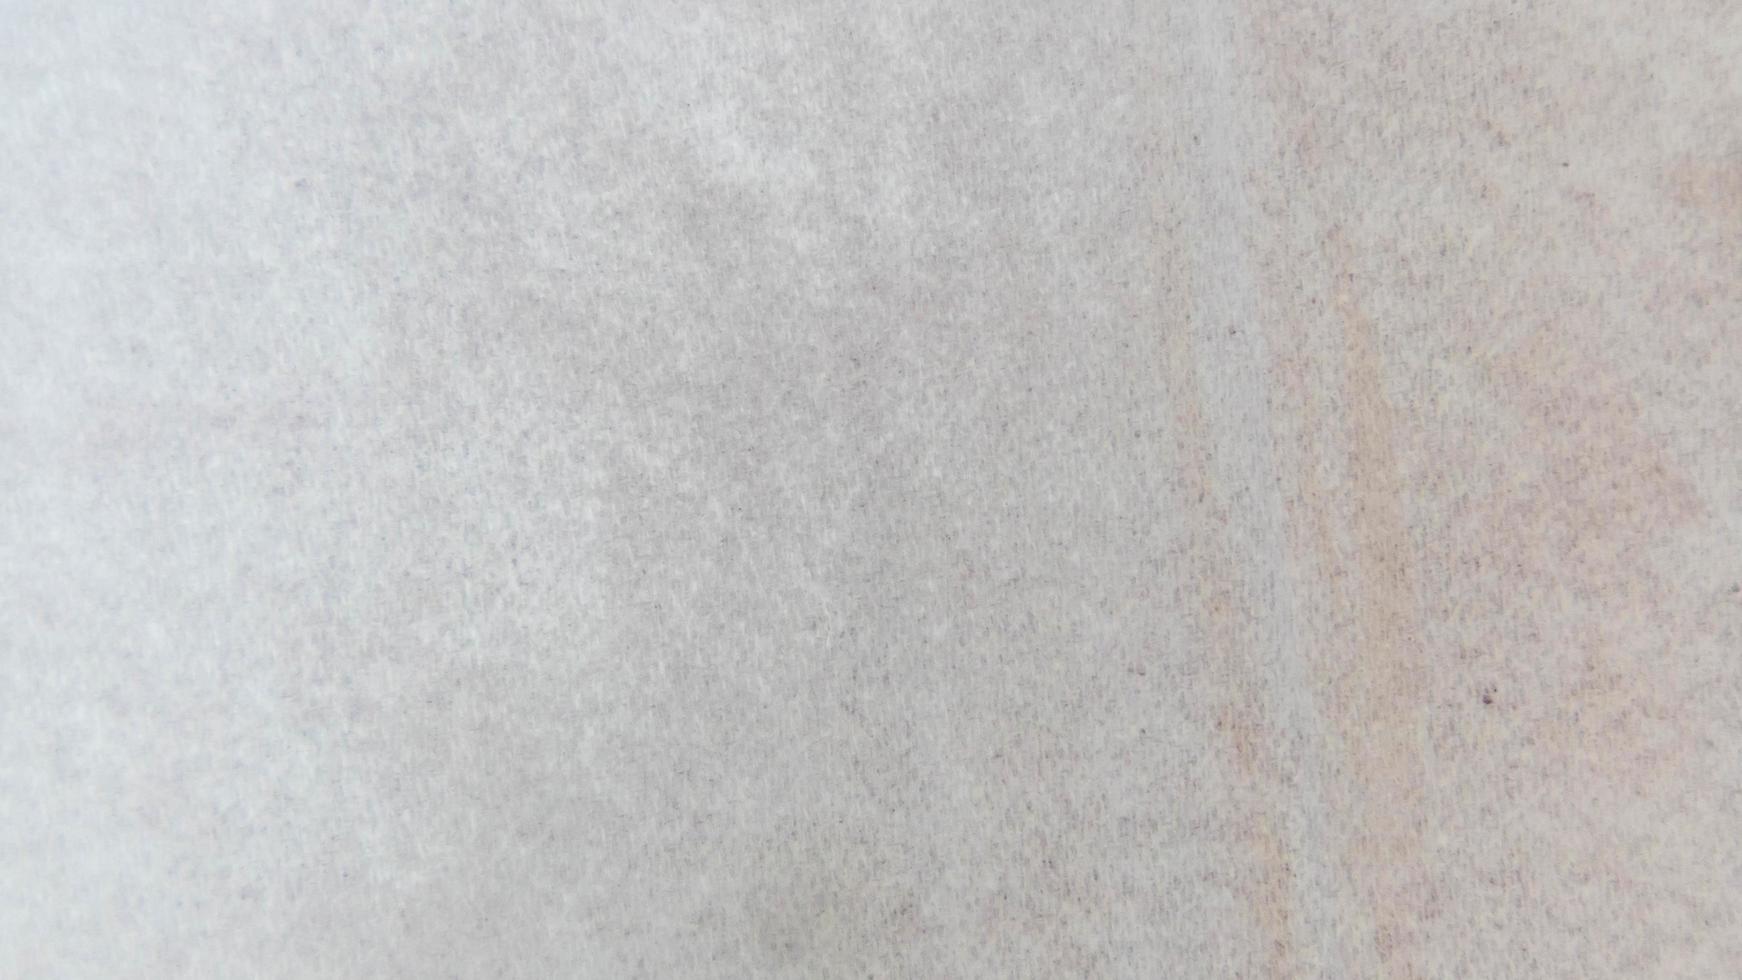 white wipes texture as background photo